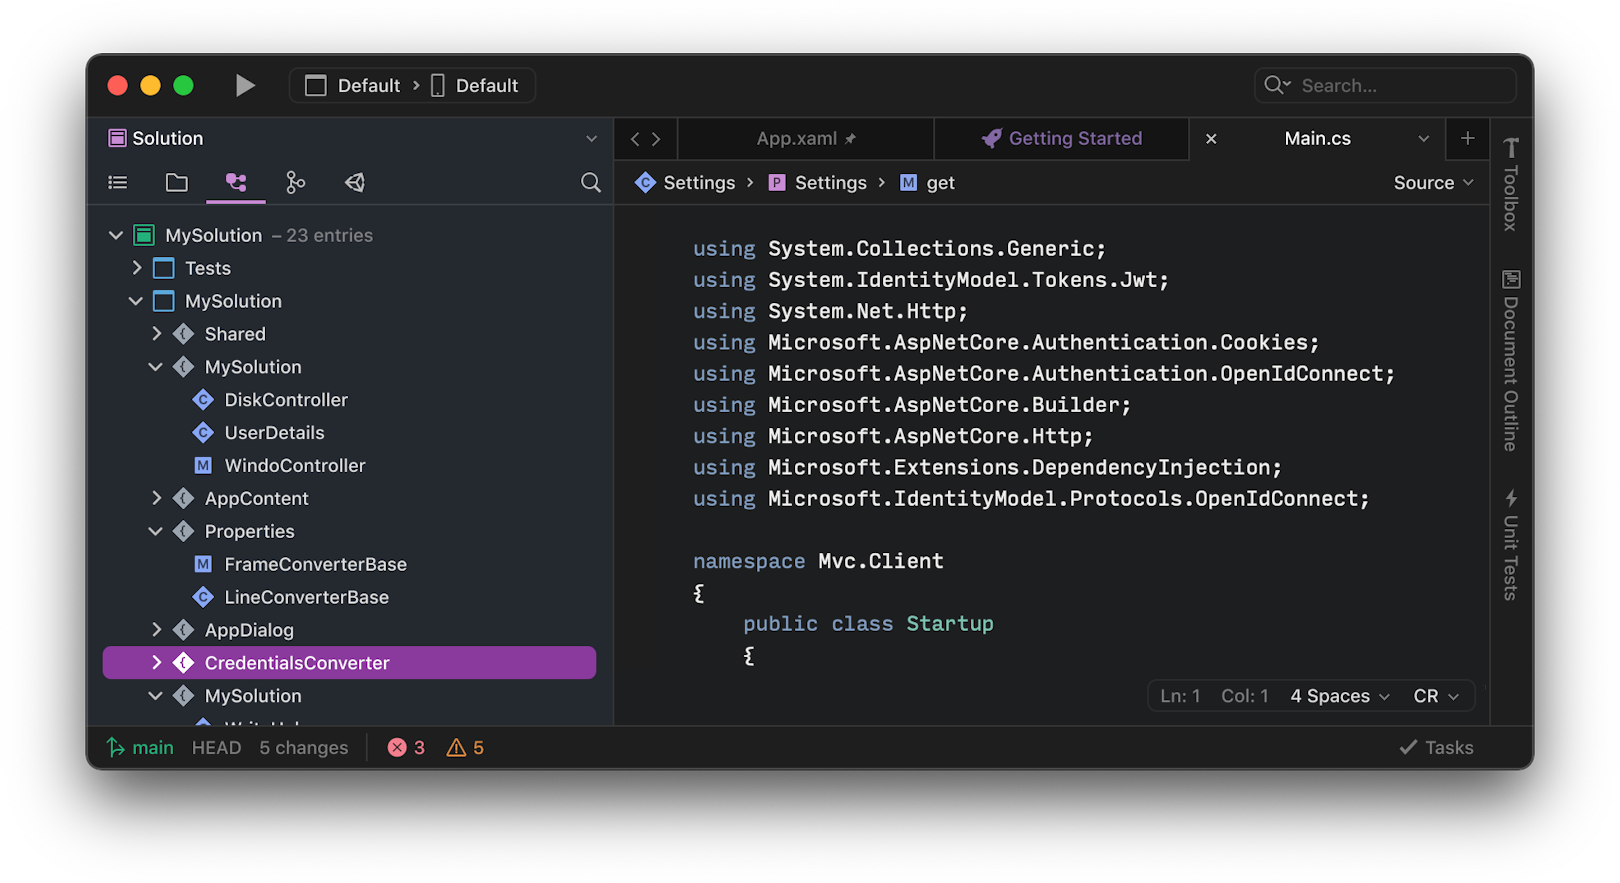 A screenshot showing Visual Studio for Mac 17 in the dark theme.